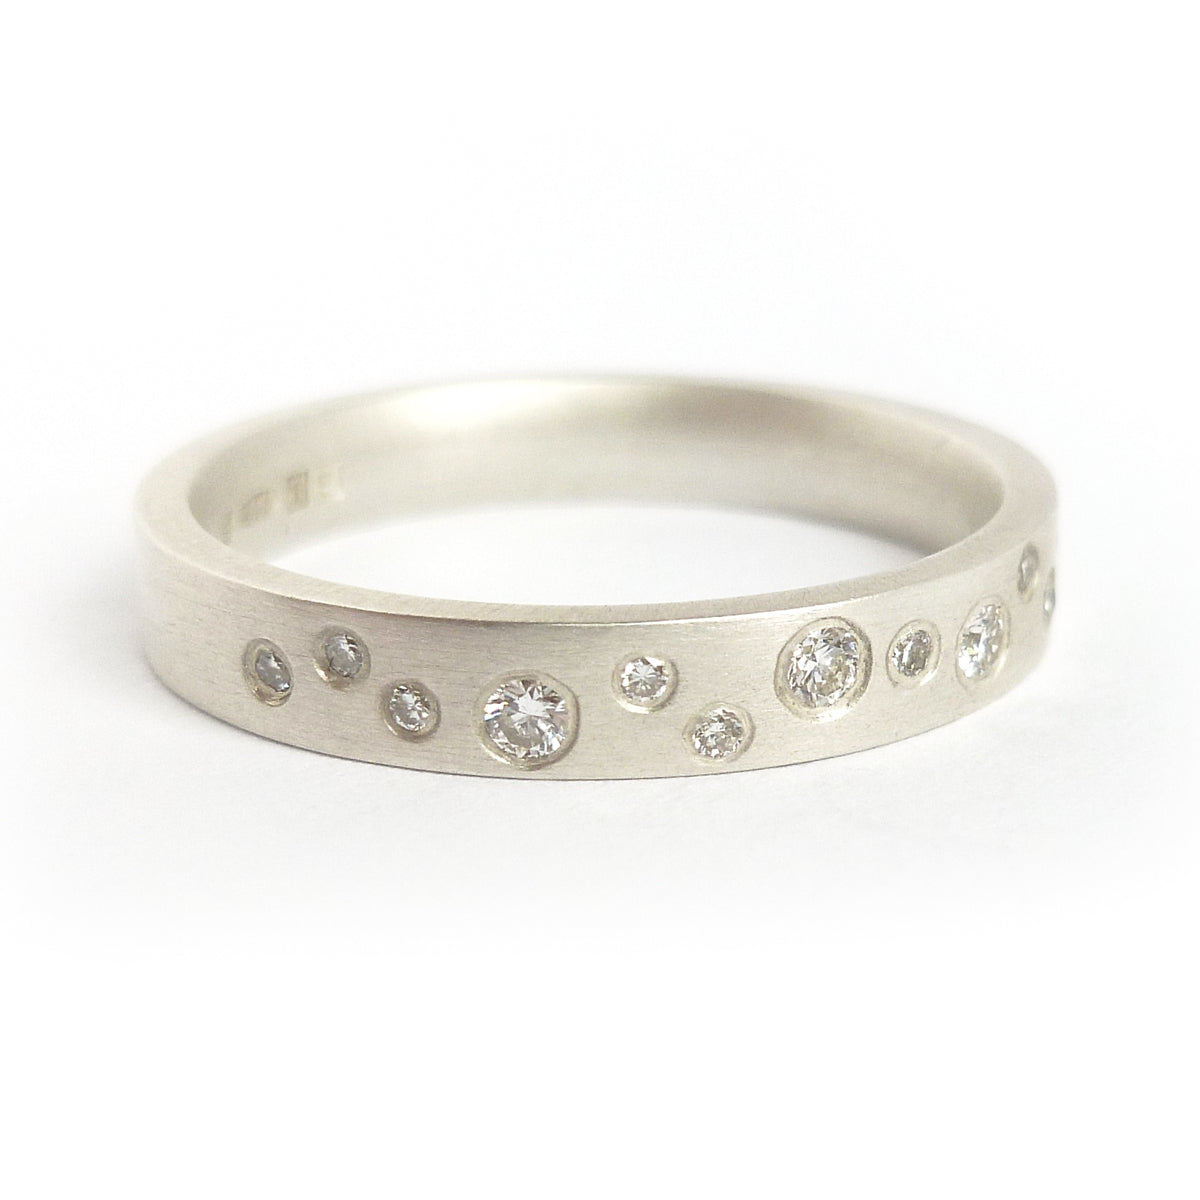 Contemporary jewellery, handmade, modern, bespoke silver eternity ring by Sue Lane